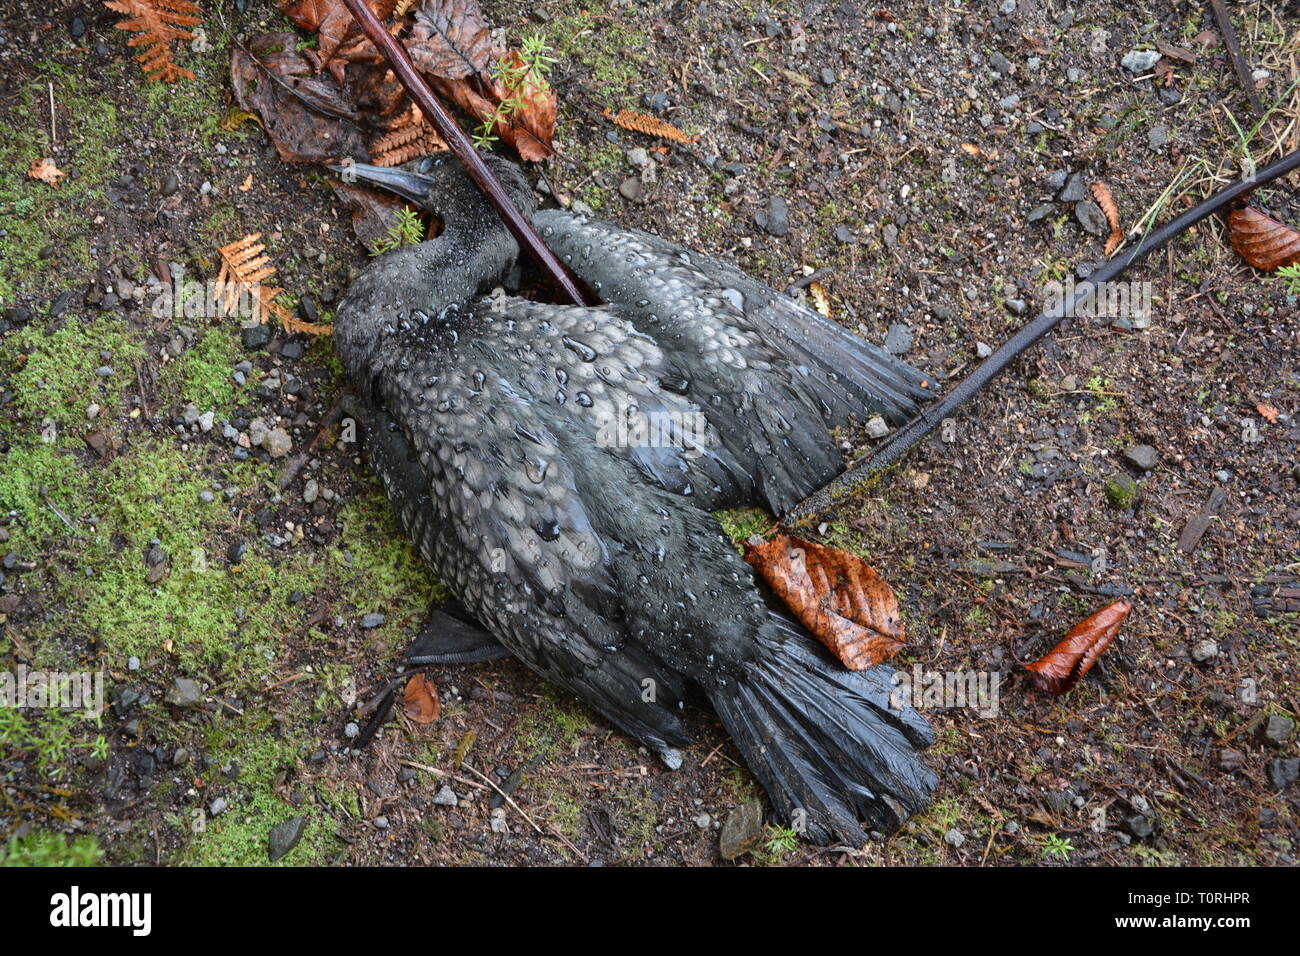 Dead little black cormorant (Phalacrocorax sulcirostris) or little black shag on the forest floor, New Zealand Stock Photo